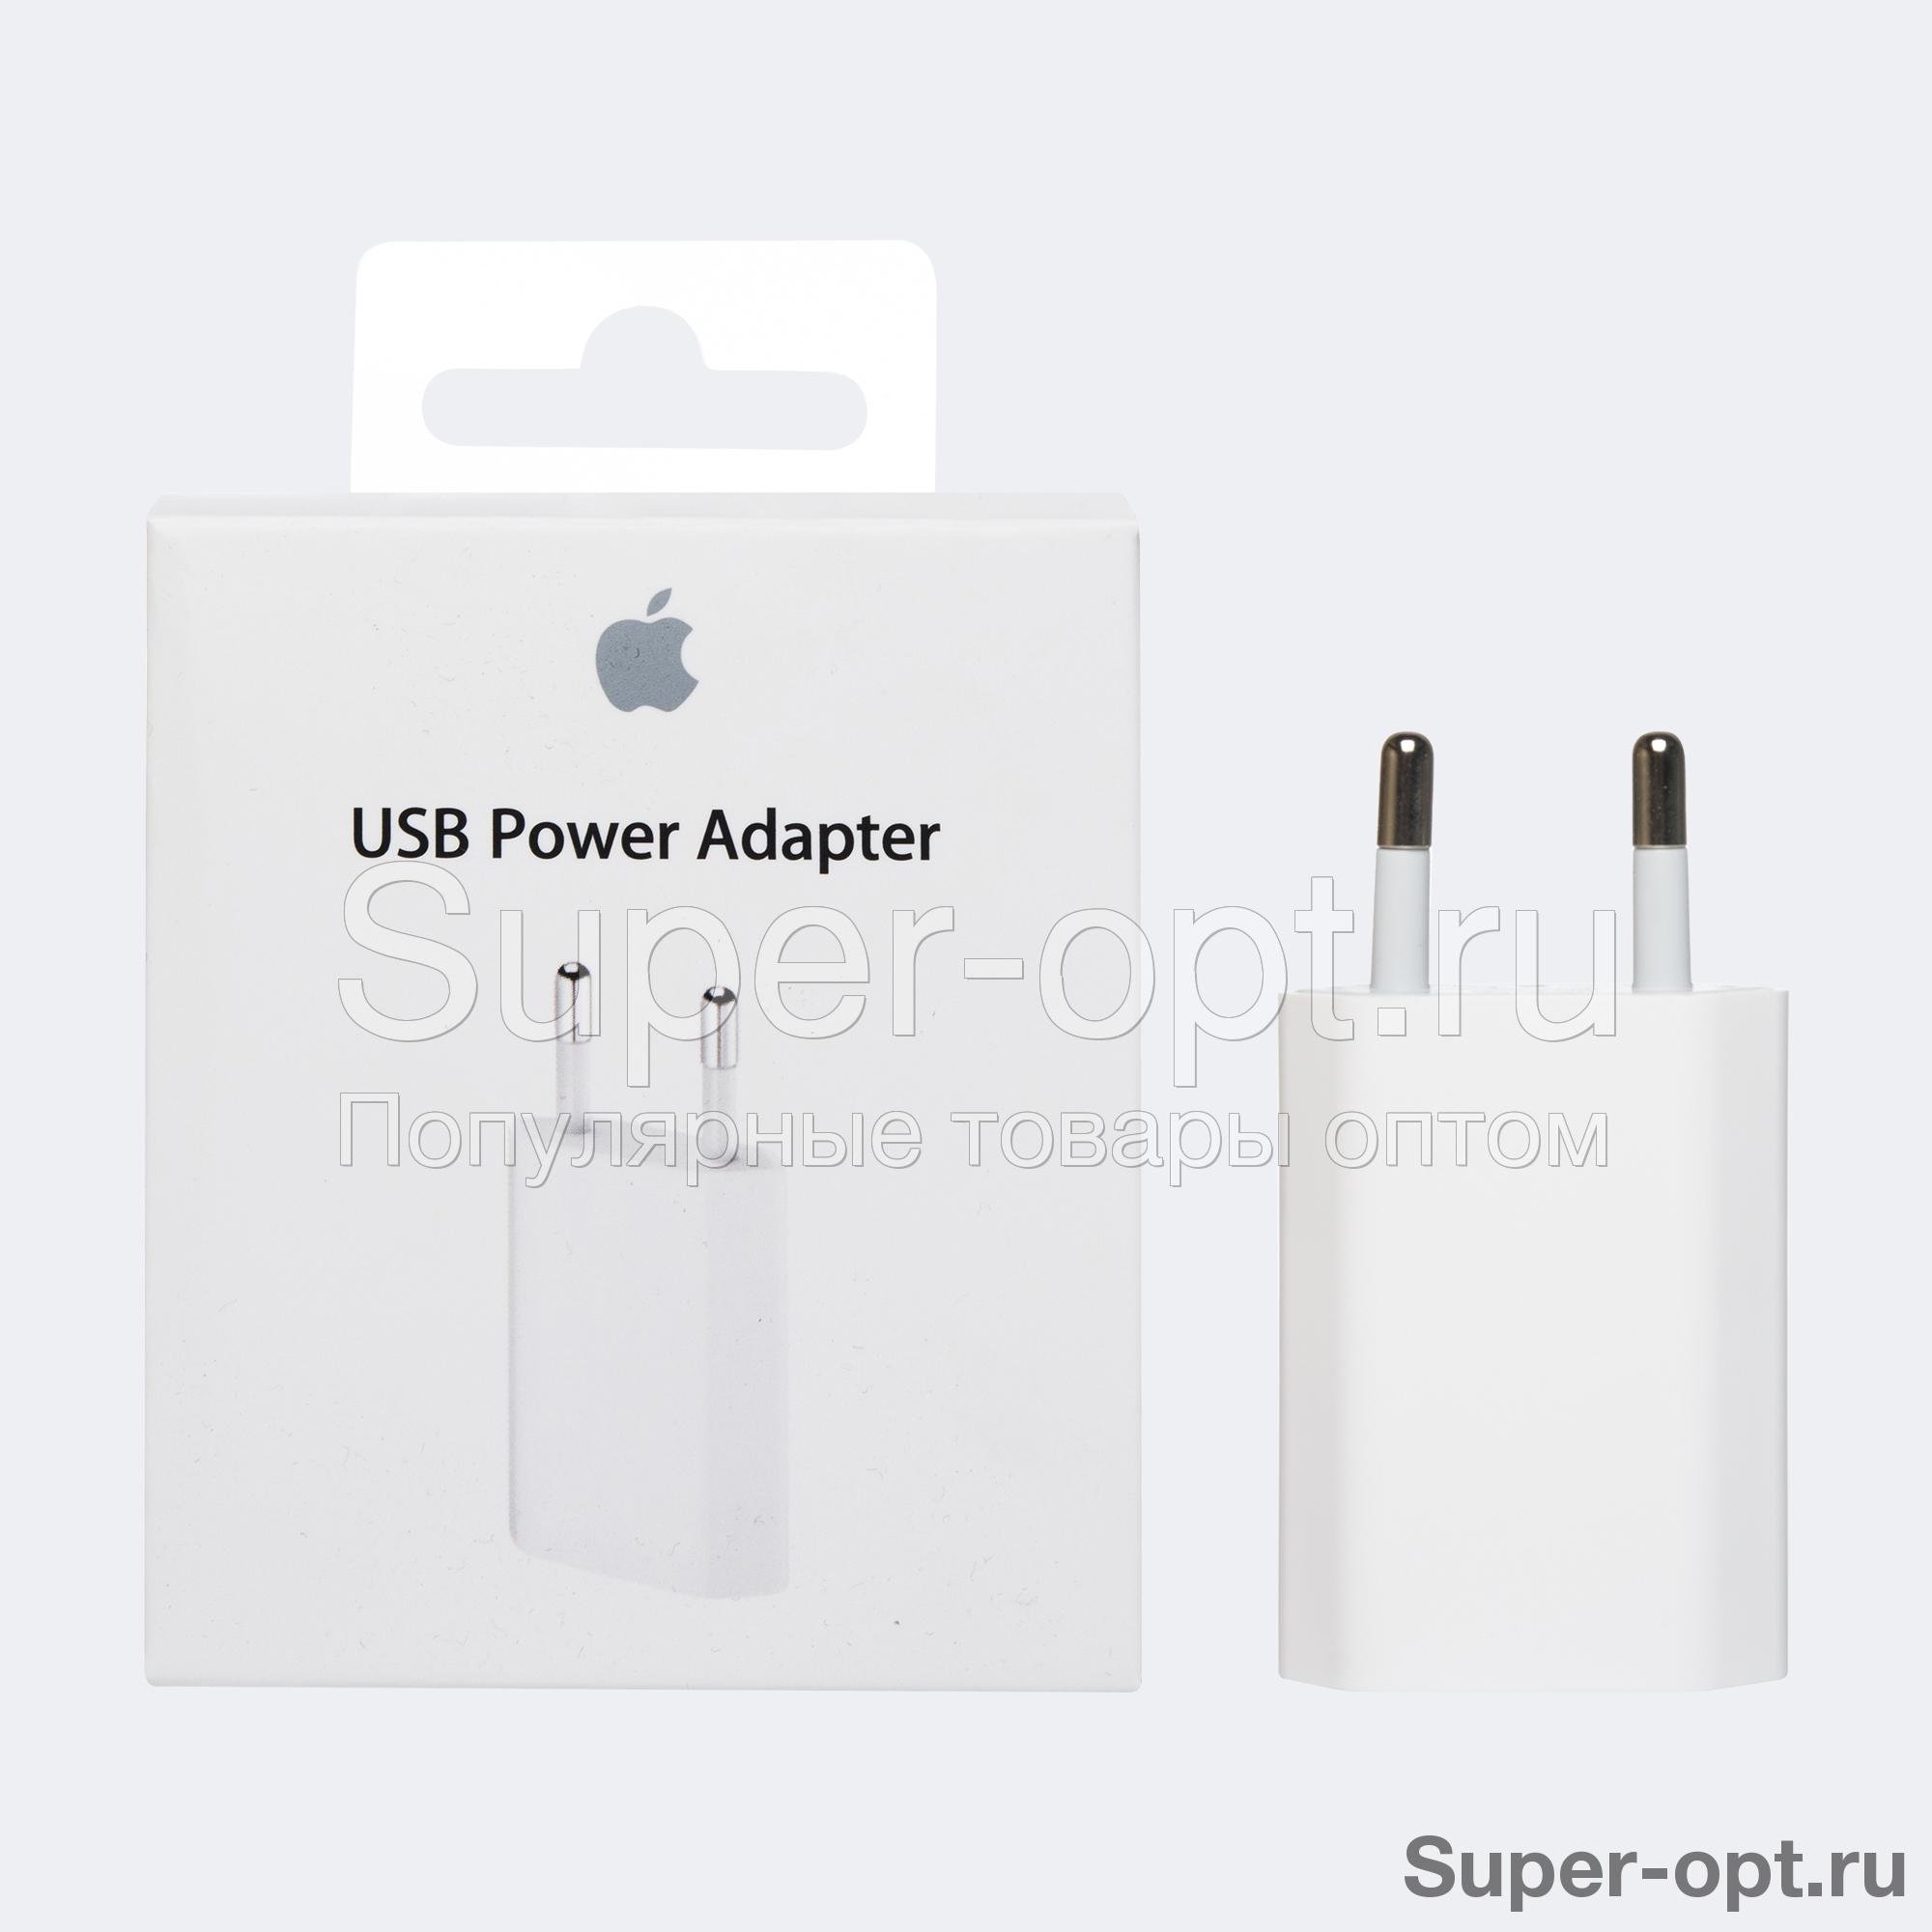 Сетевой USB адаптер Power Adapter для iPhone